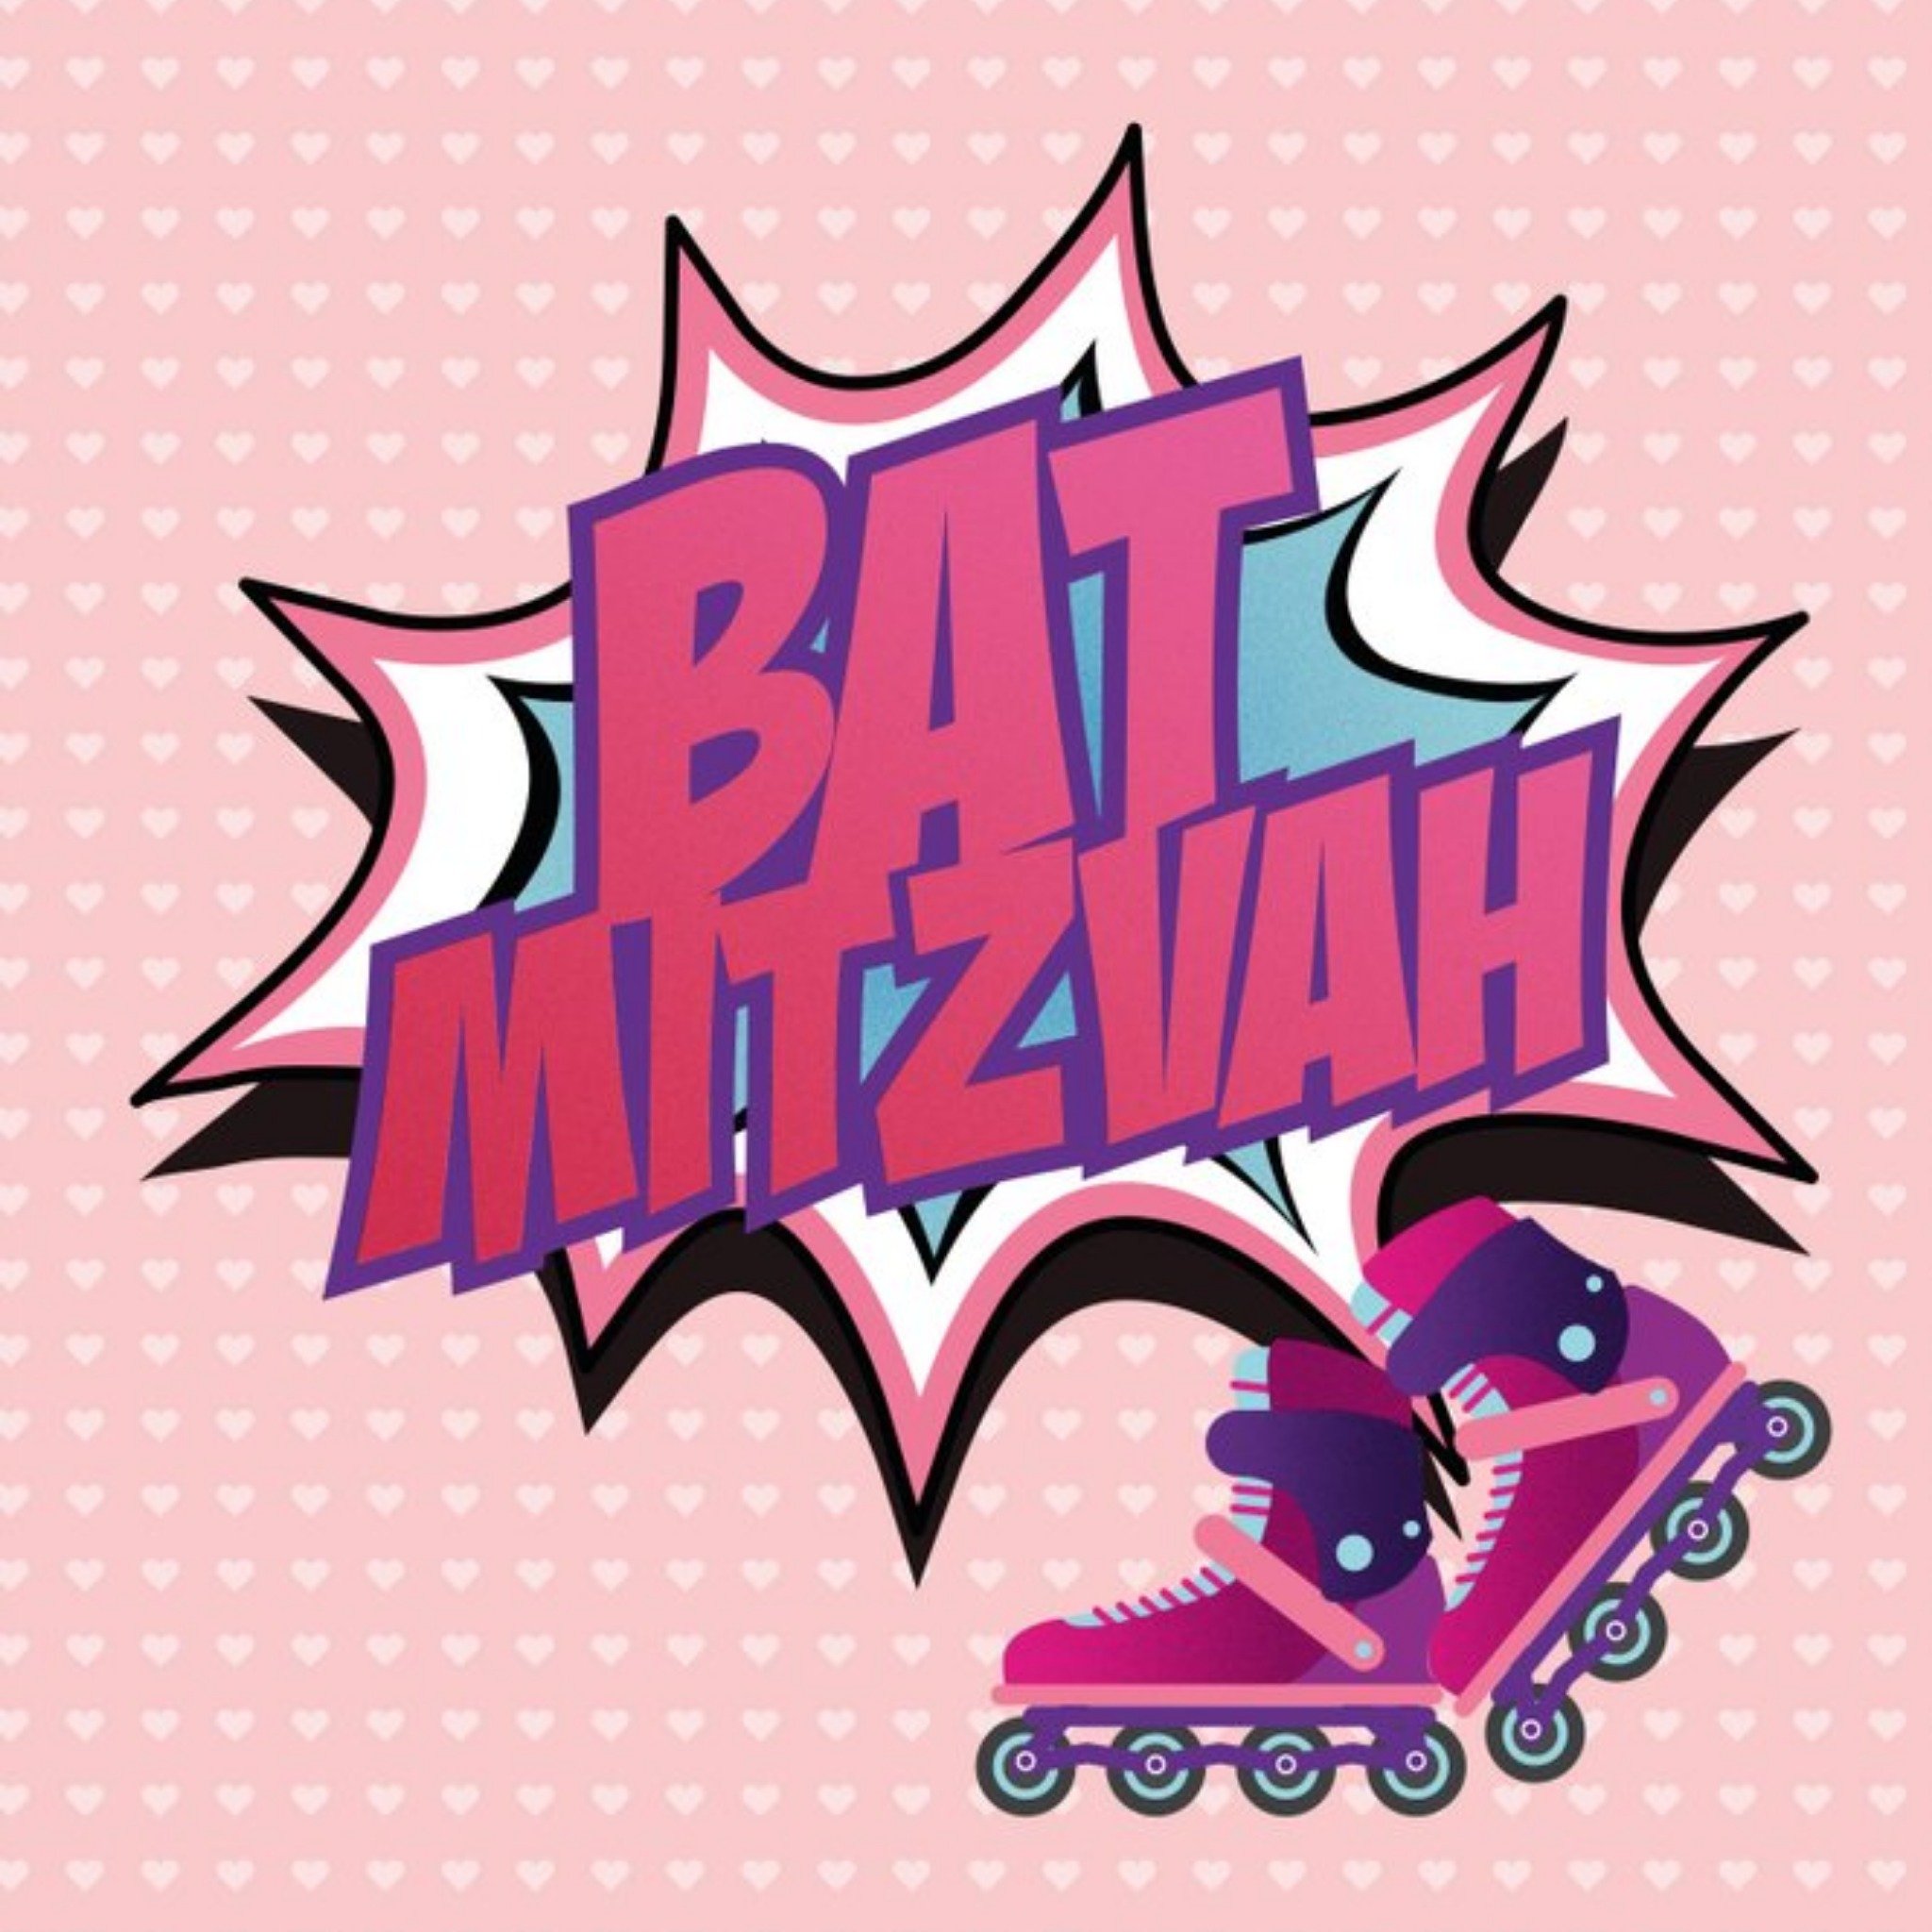 Moonpig Retro Bat Mitzvah Card, Square